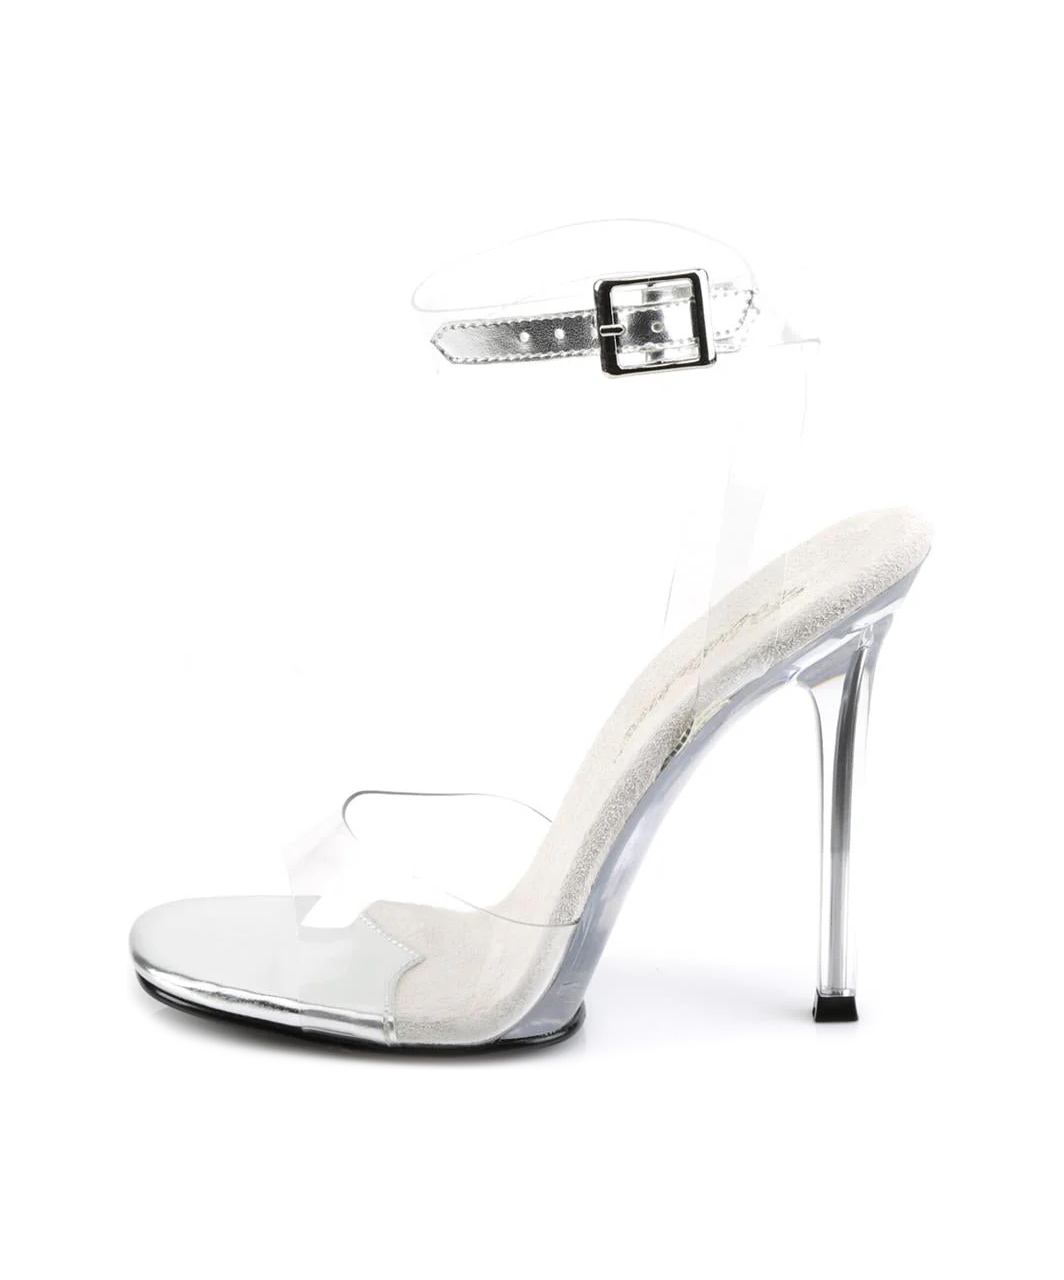 Pleaser Gala-06 C/M high heel sandals